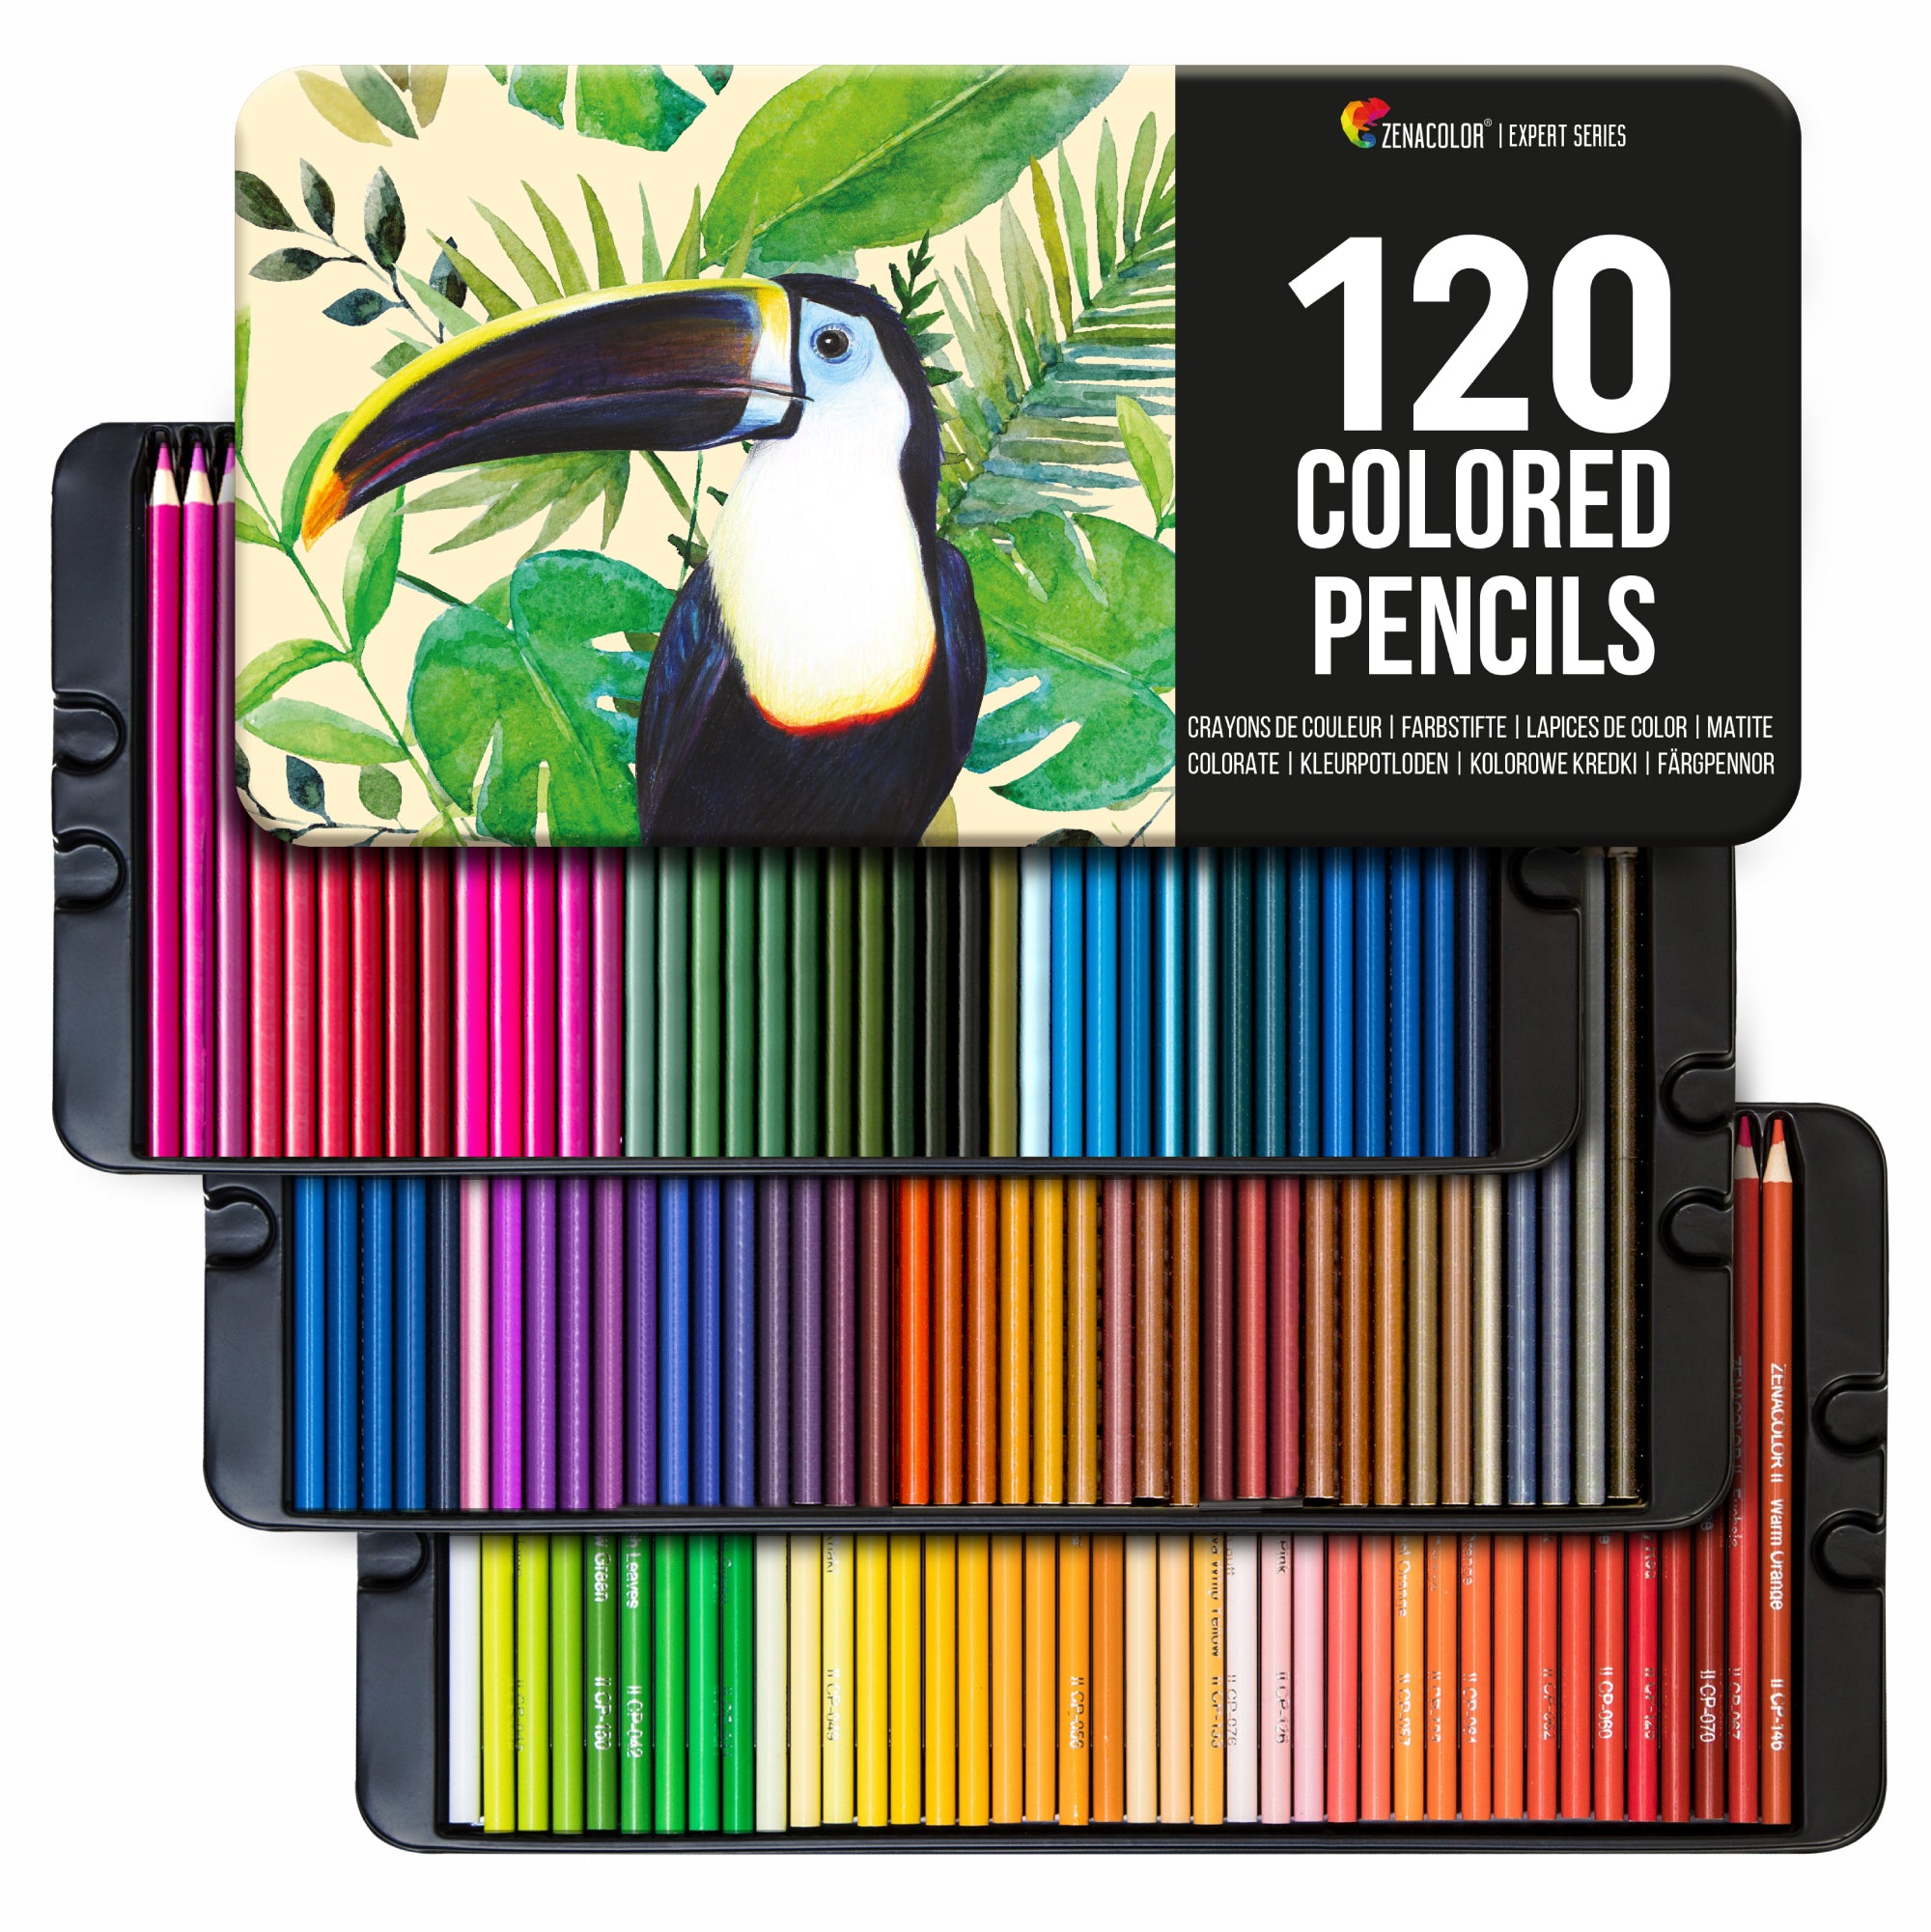 Okuyonic 120 Colored Pencils, Polychromos Colored Pencils Delicate